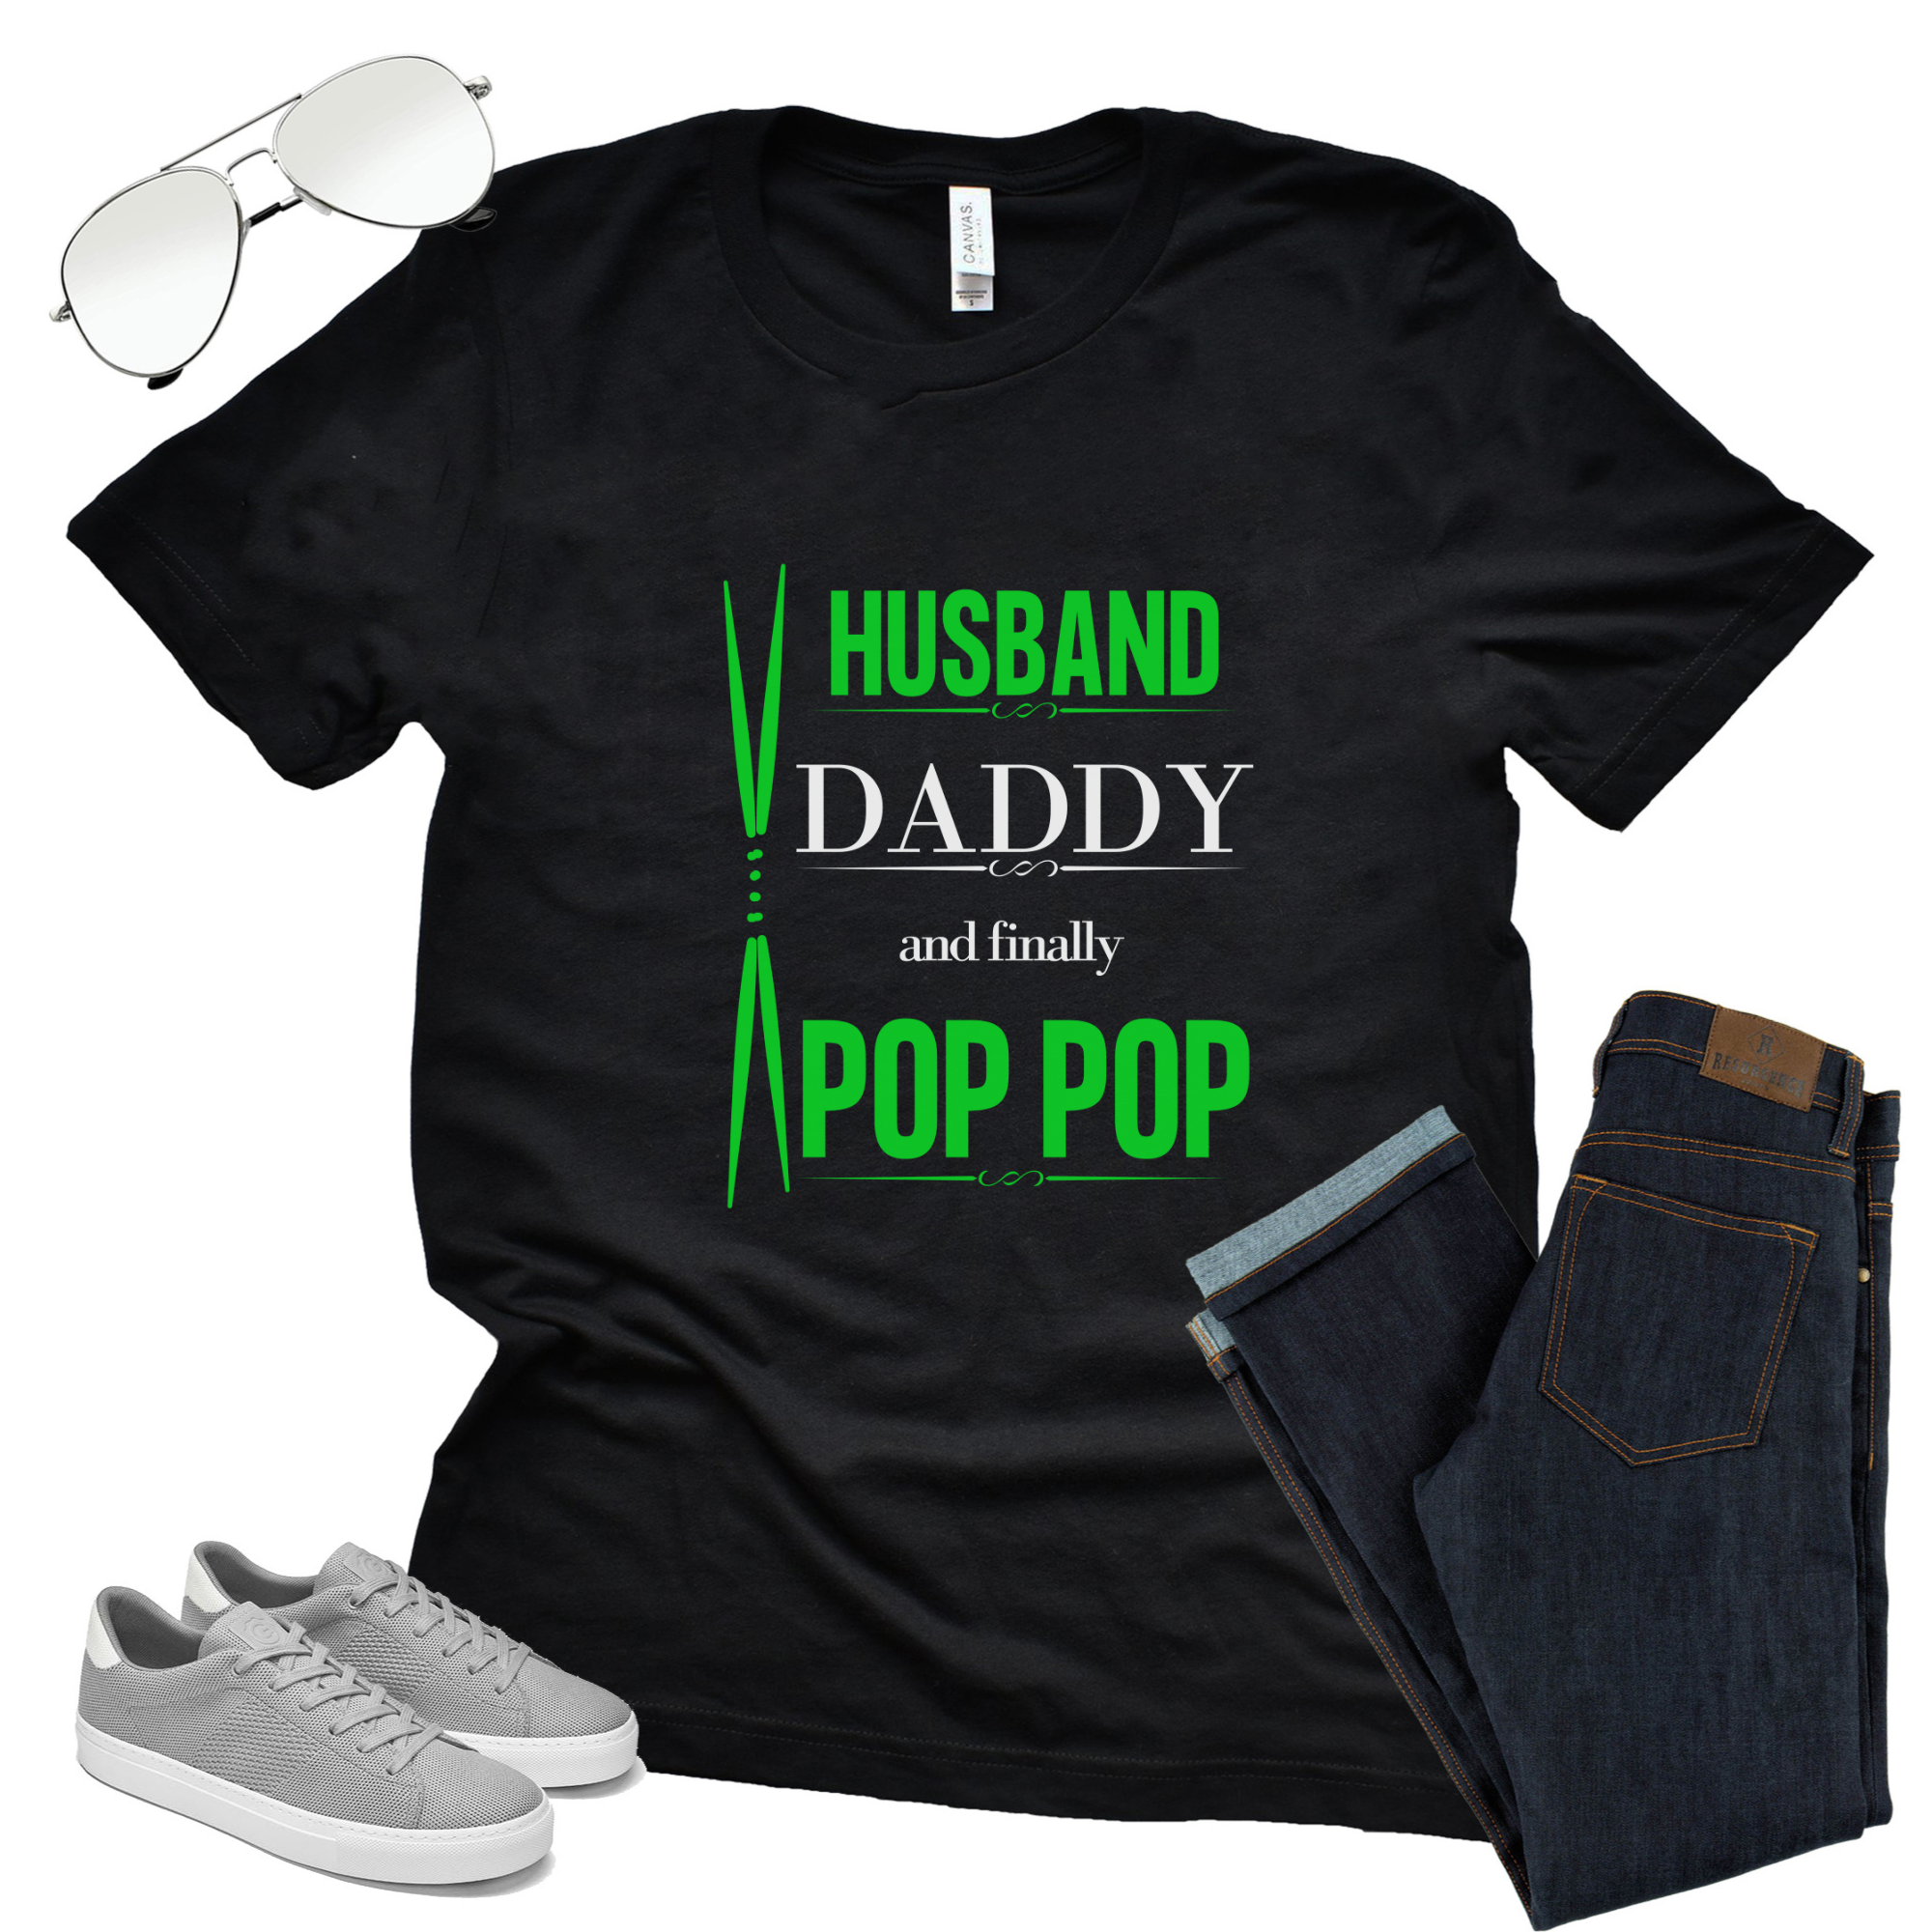 Finally Pop Pop Father's Day T-Shirt